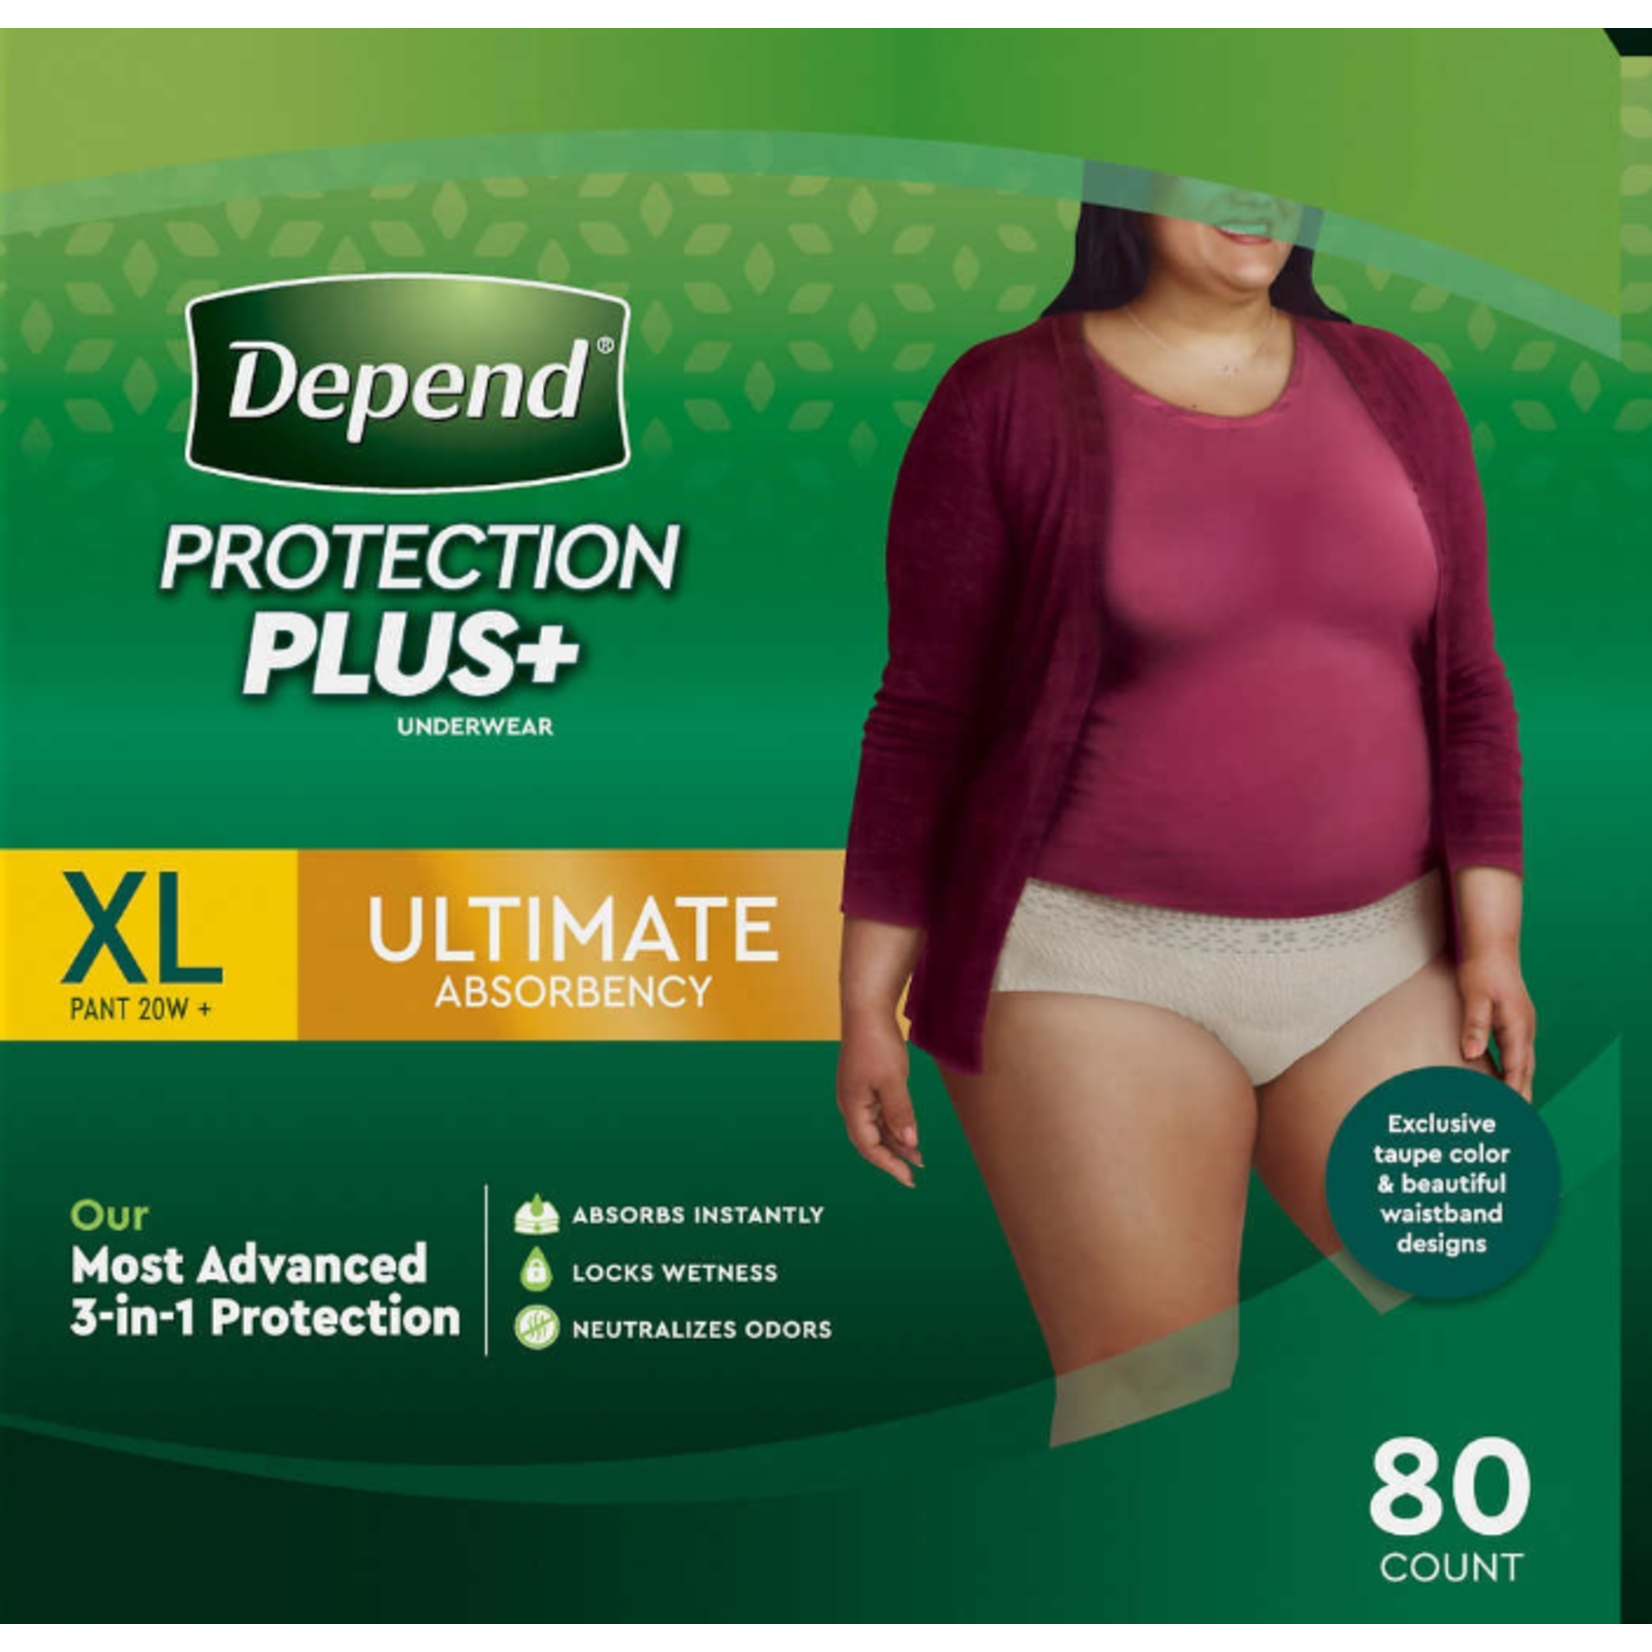 Depend Protection Plus+ Women